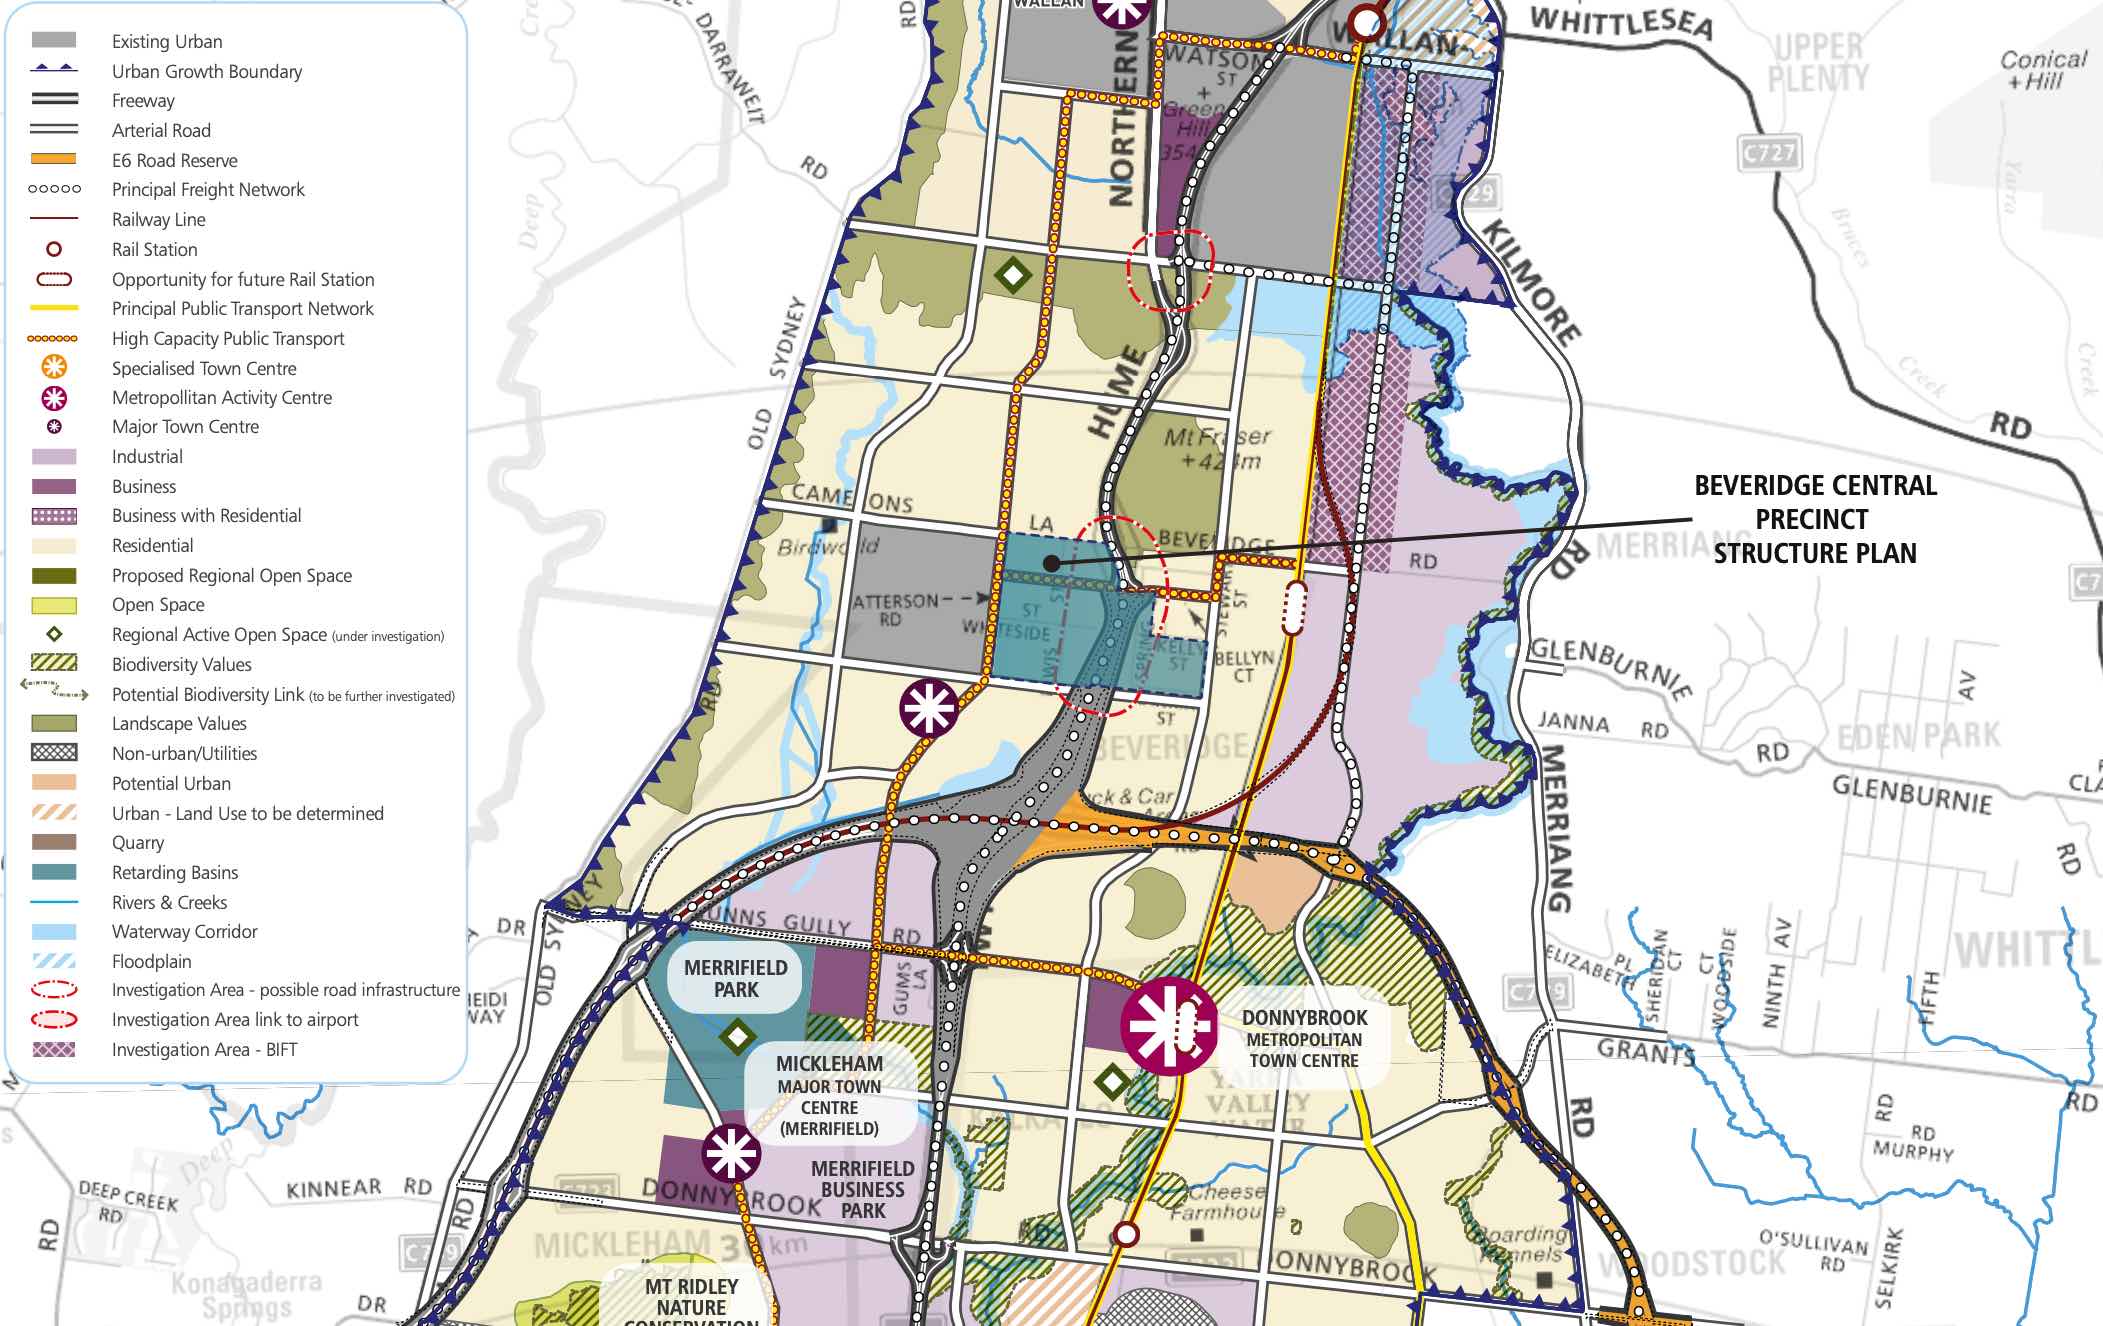 Beveridge Central Precinct Structure Plan – Location map